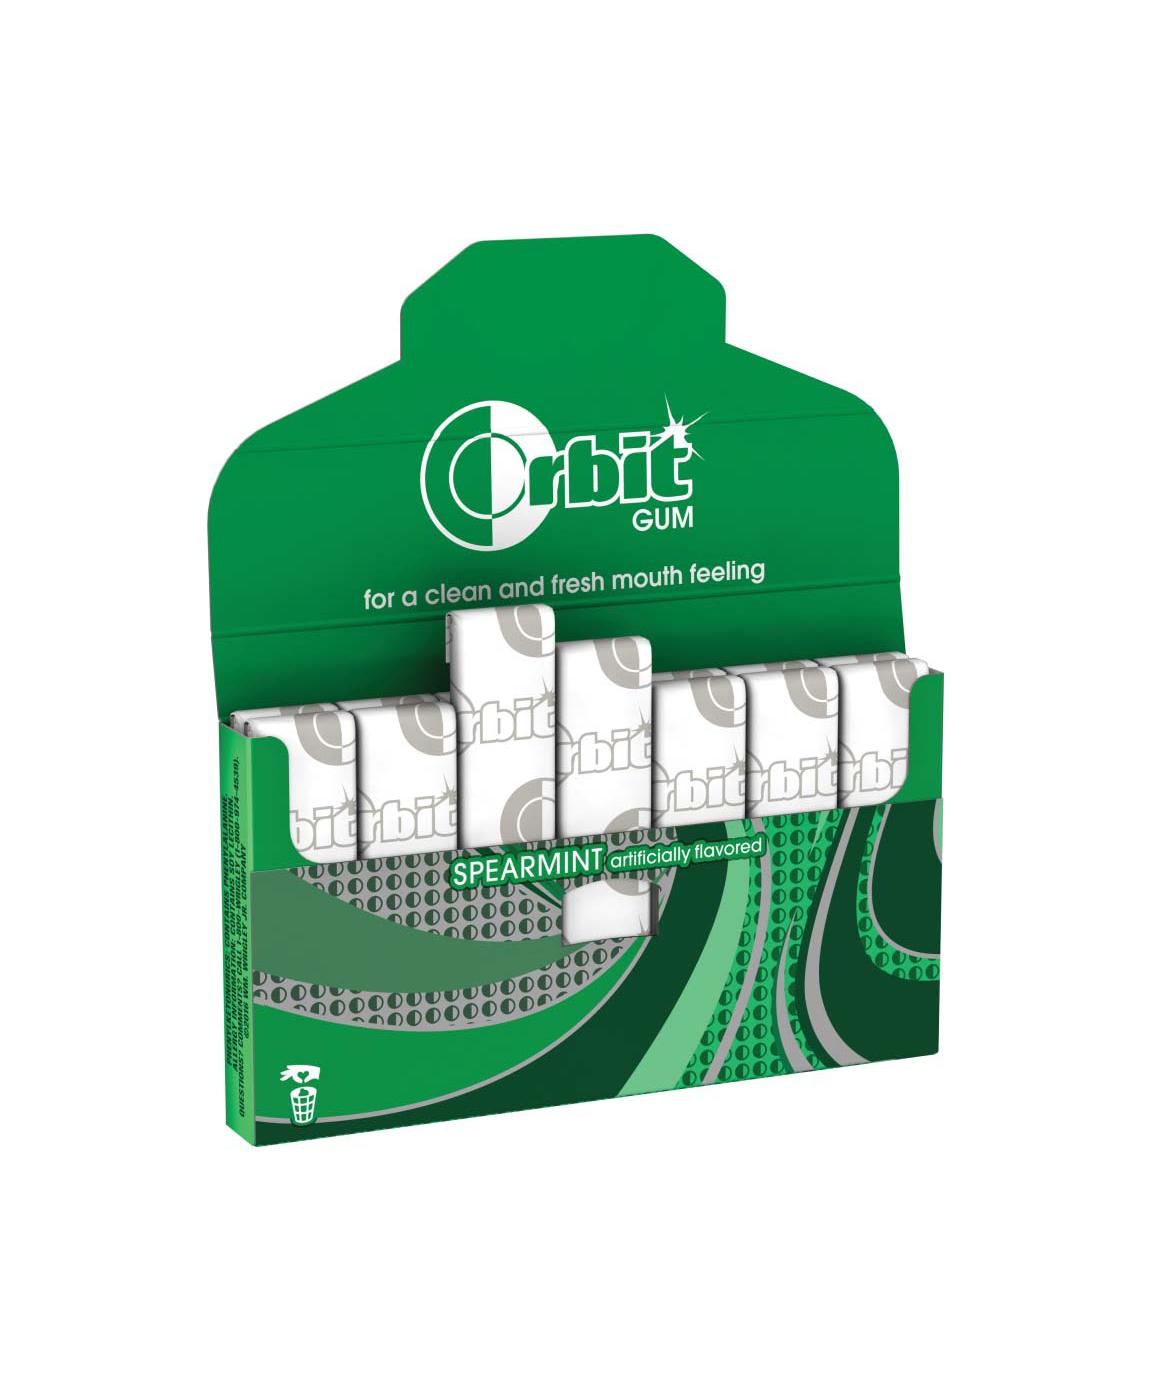 Orbit Sugar Free Chewing Gum Value Pack - Spearmint, 8 Pk; image 4 of 5